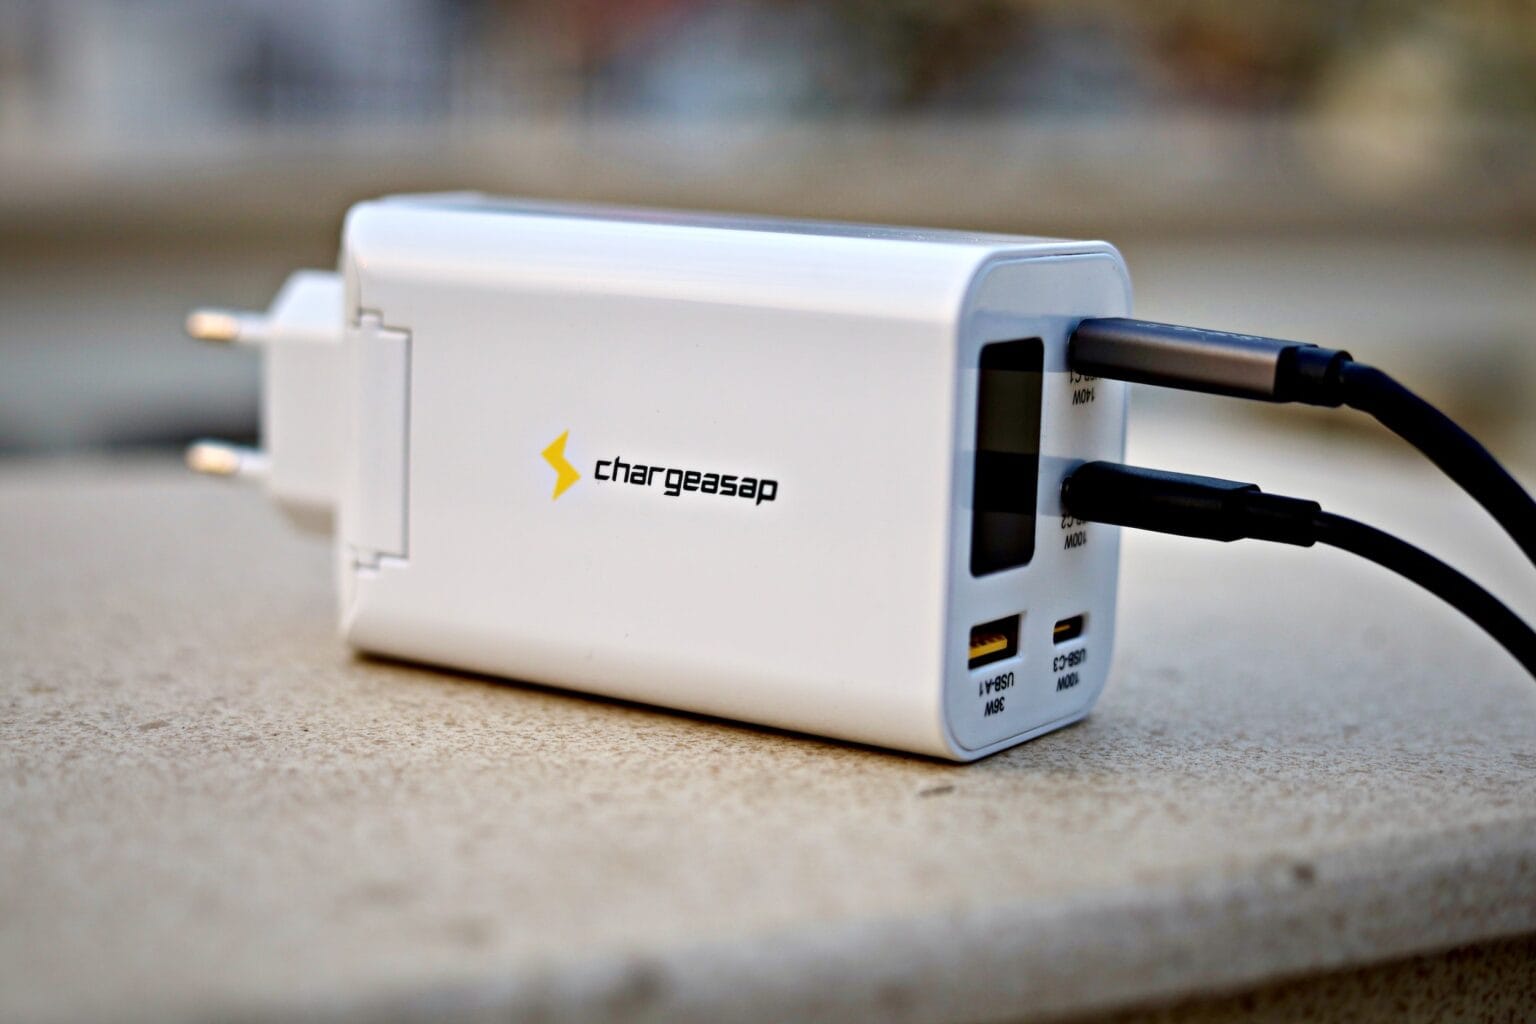 Chargeasap Zeus 270W - Meet the world's first 270W GaN charger